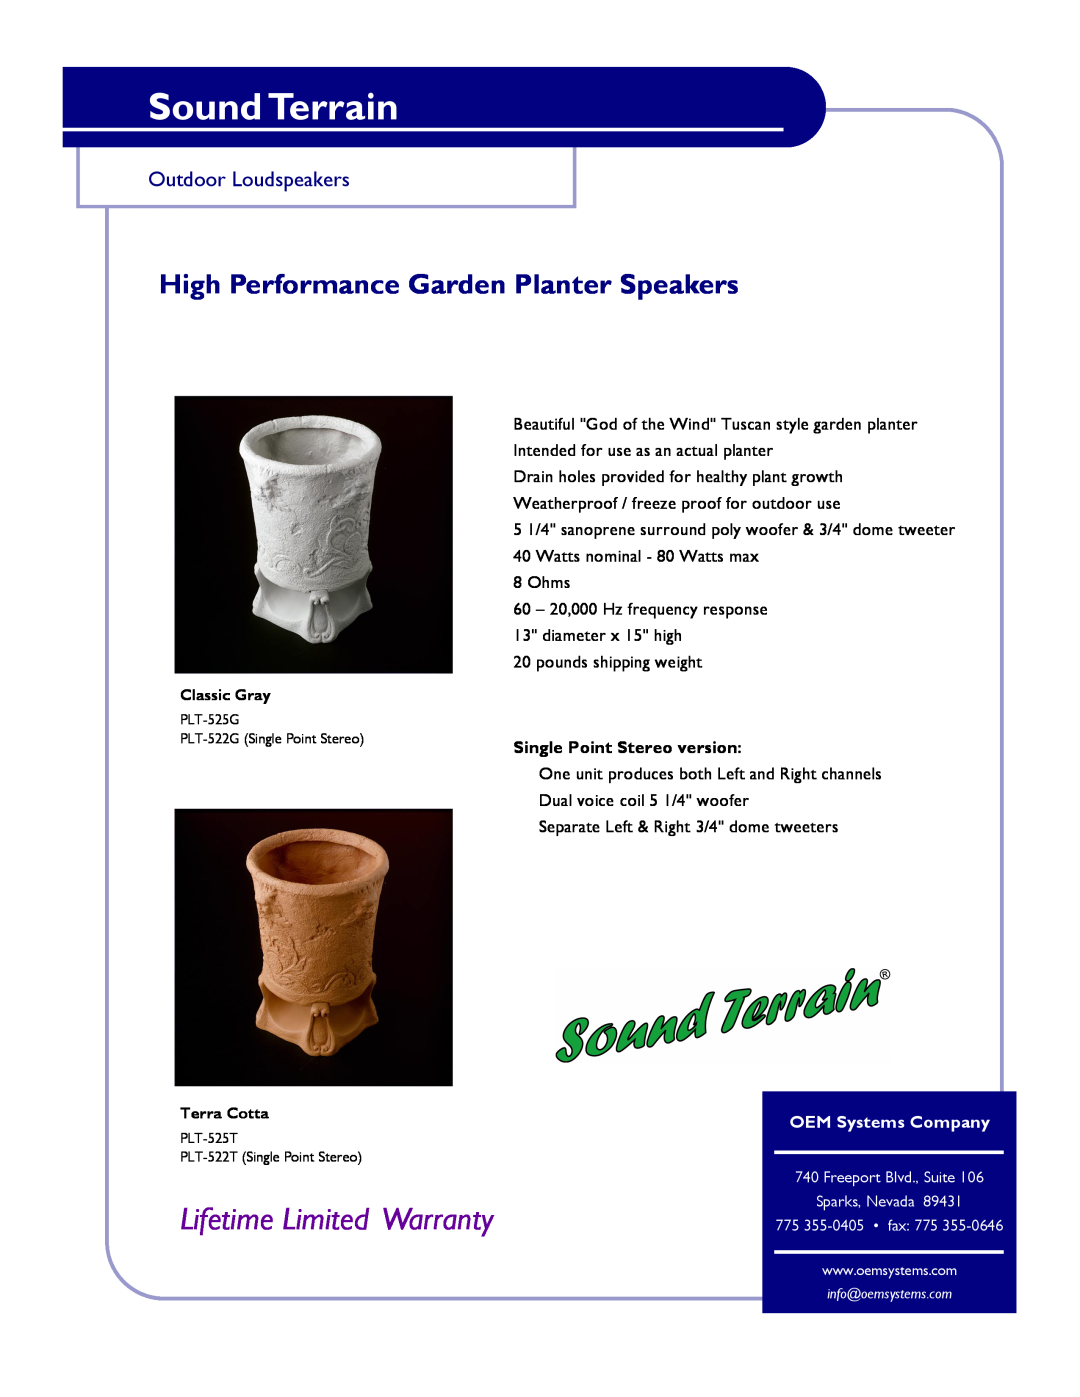 OEM Systems PLT-525, PLT-522G warranty Sound Terrain, Lifetime Limited Warranty, High Performance Garden Planter Speakers 